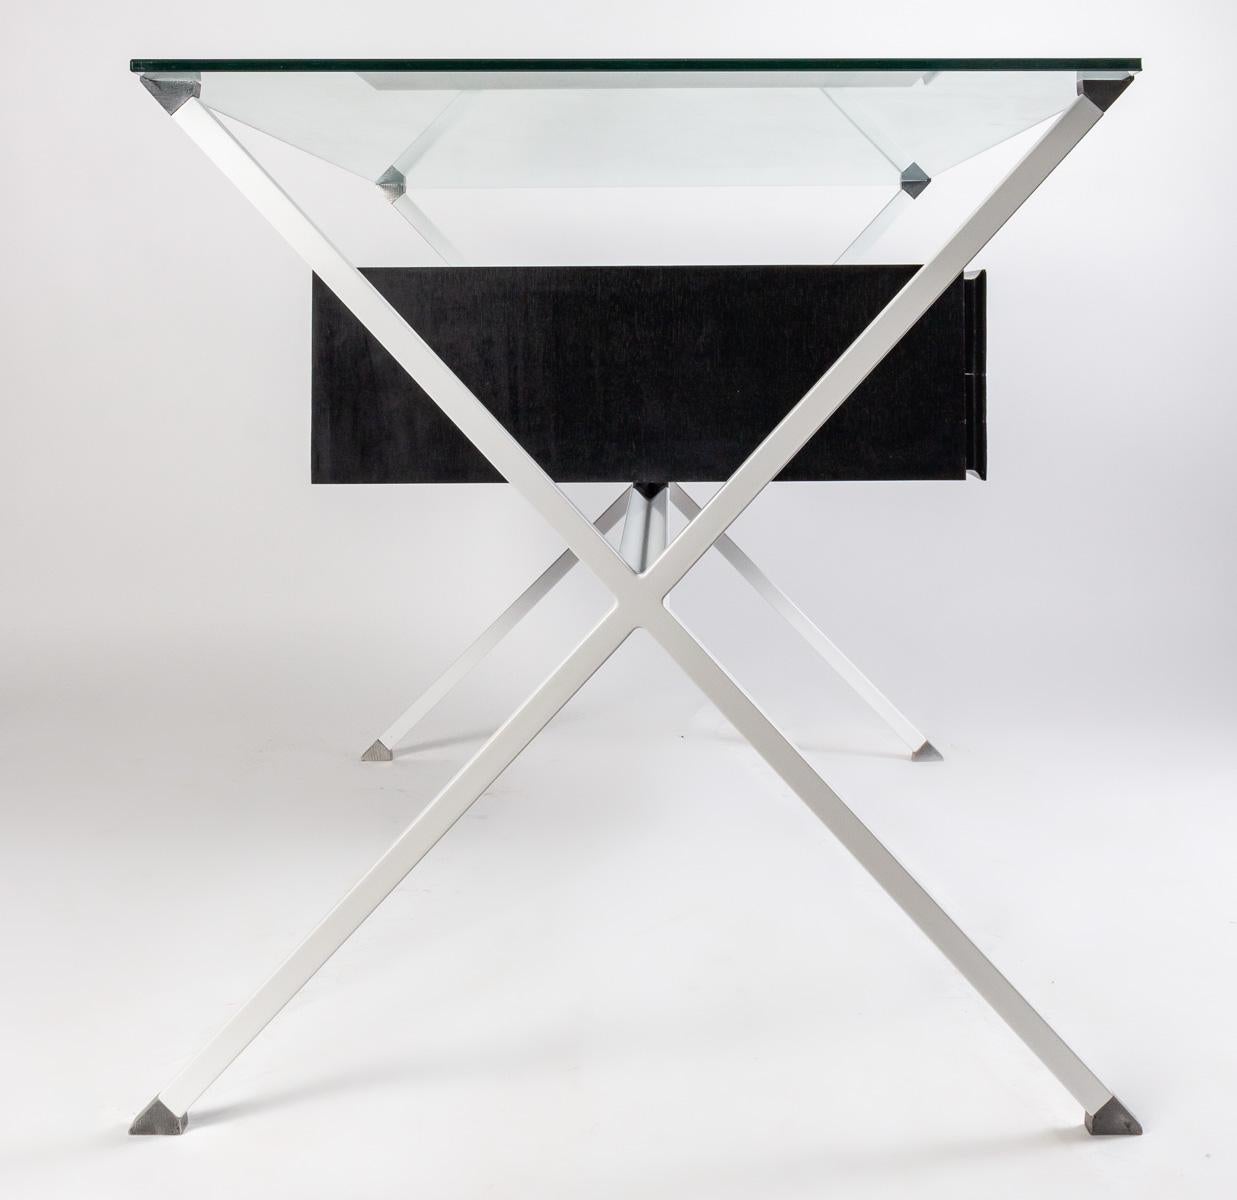 Minimalist desk Franco Albini for Knoll International, European mid-century modern desk from the 1950s.
Authentic 